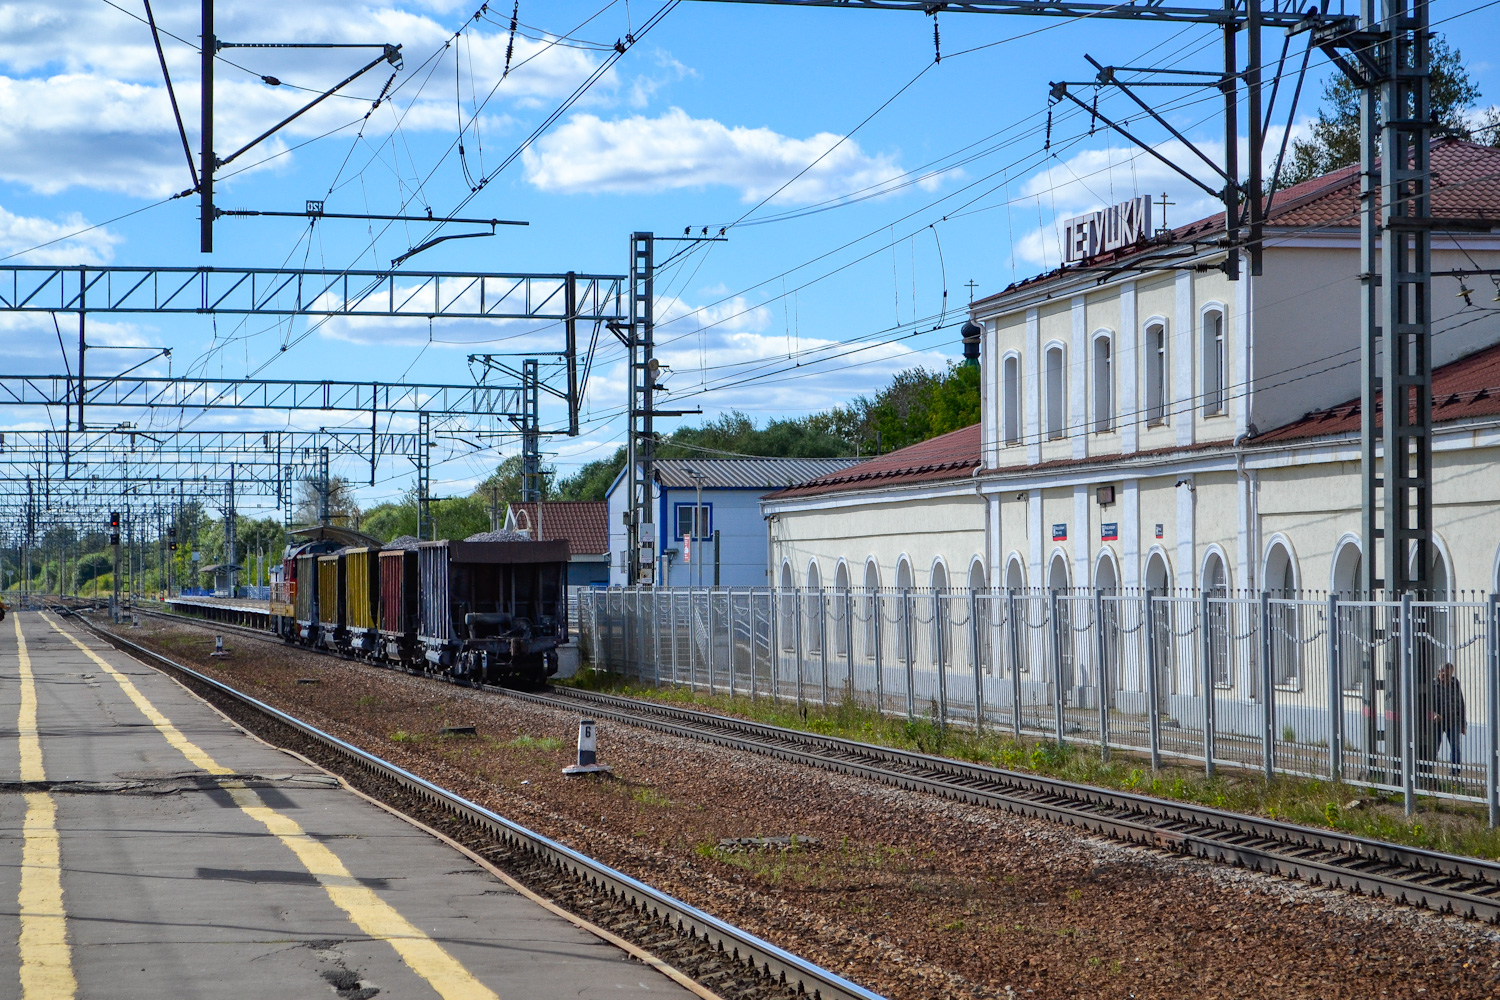 Gorky Railway — Stations